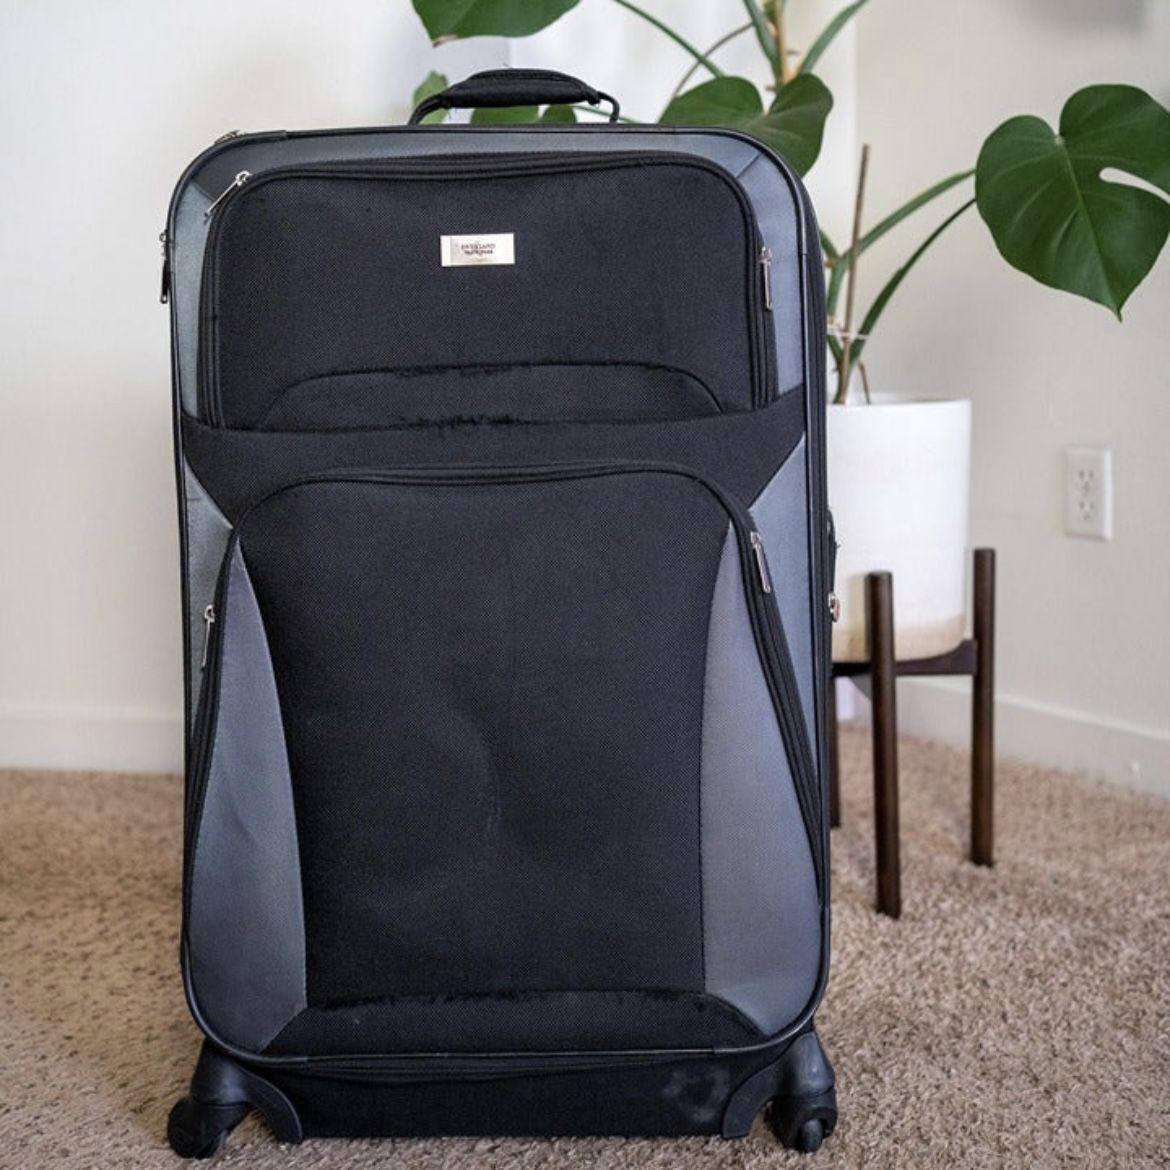 Overland Travelwear Large Expandable Luggage with wheels